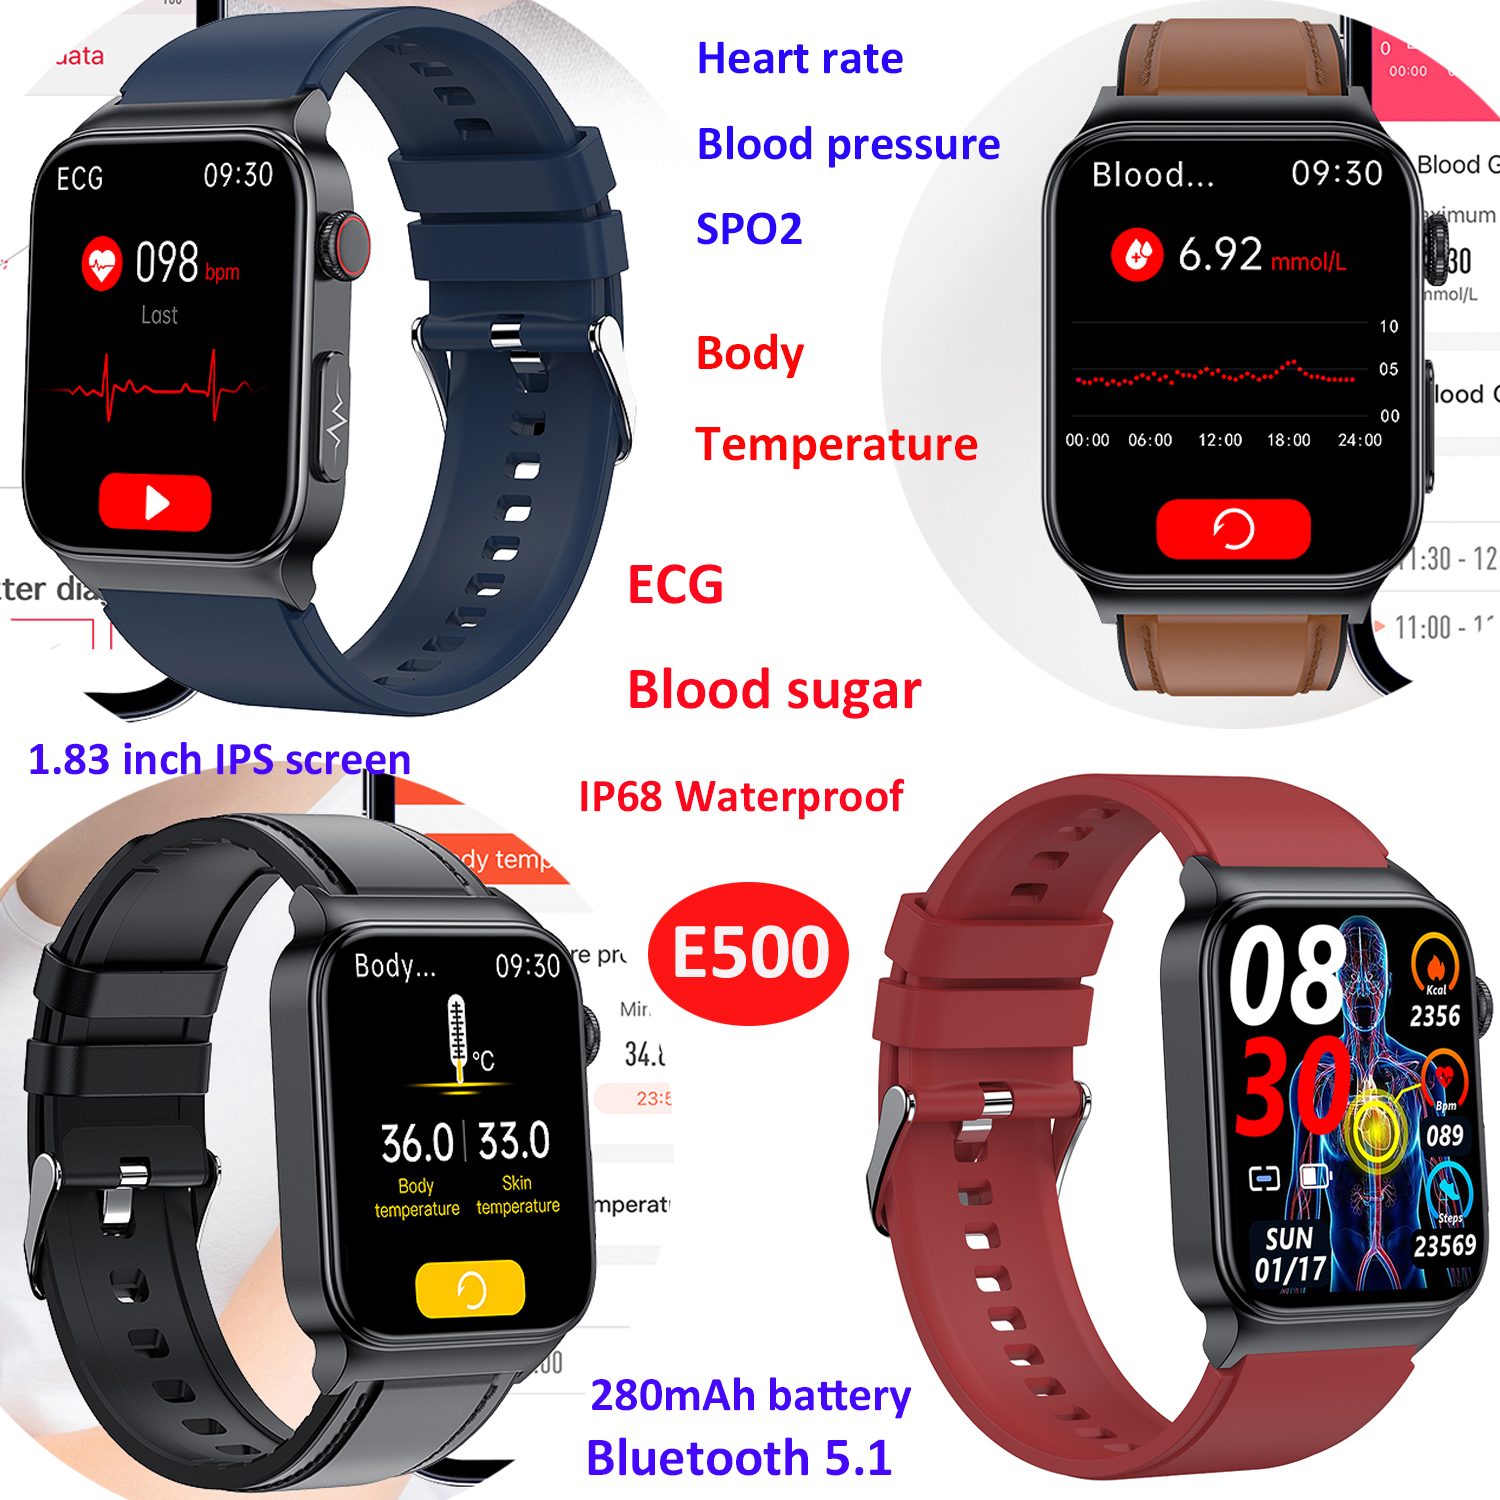 Body temperature Blood sugar waterproof ECG Smart bluetooth Watch 